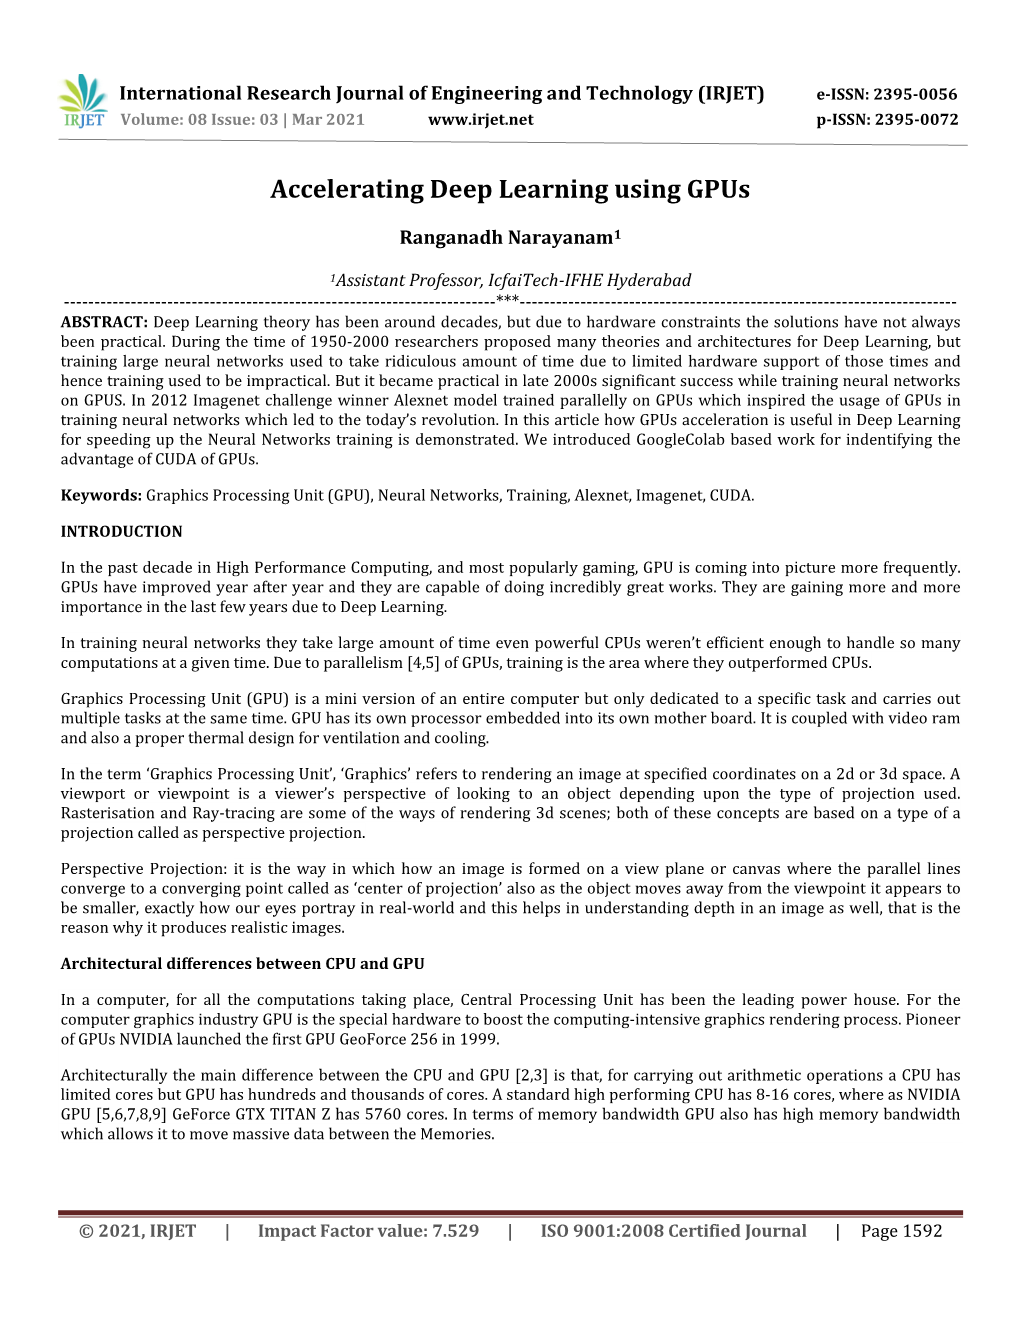 Accelerating Deep Learning Using Gpus